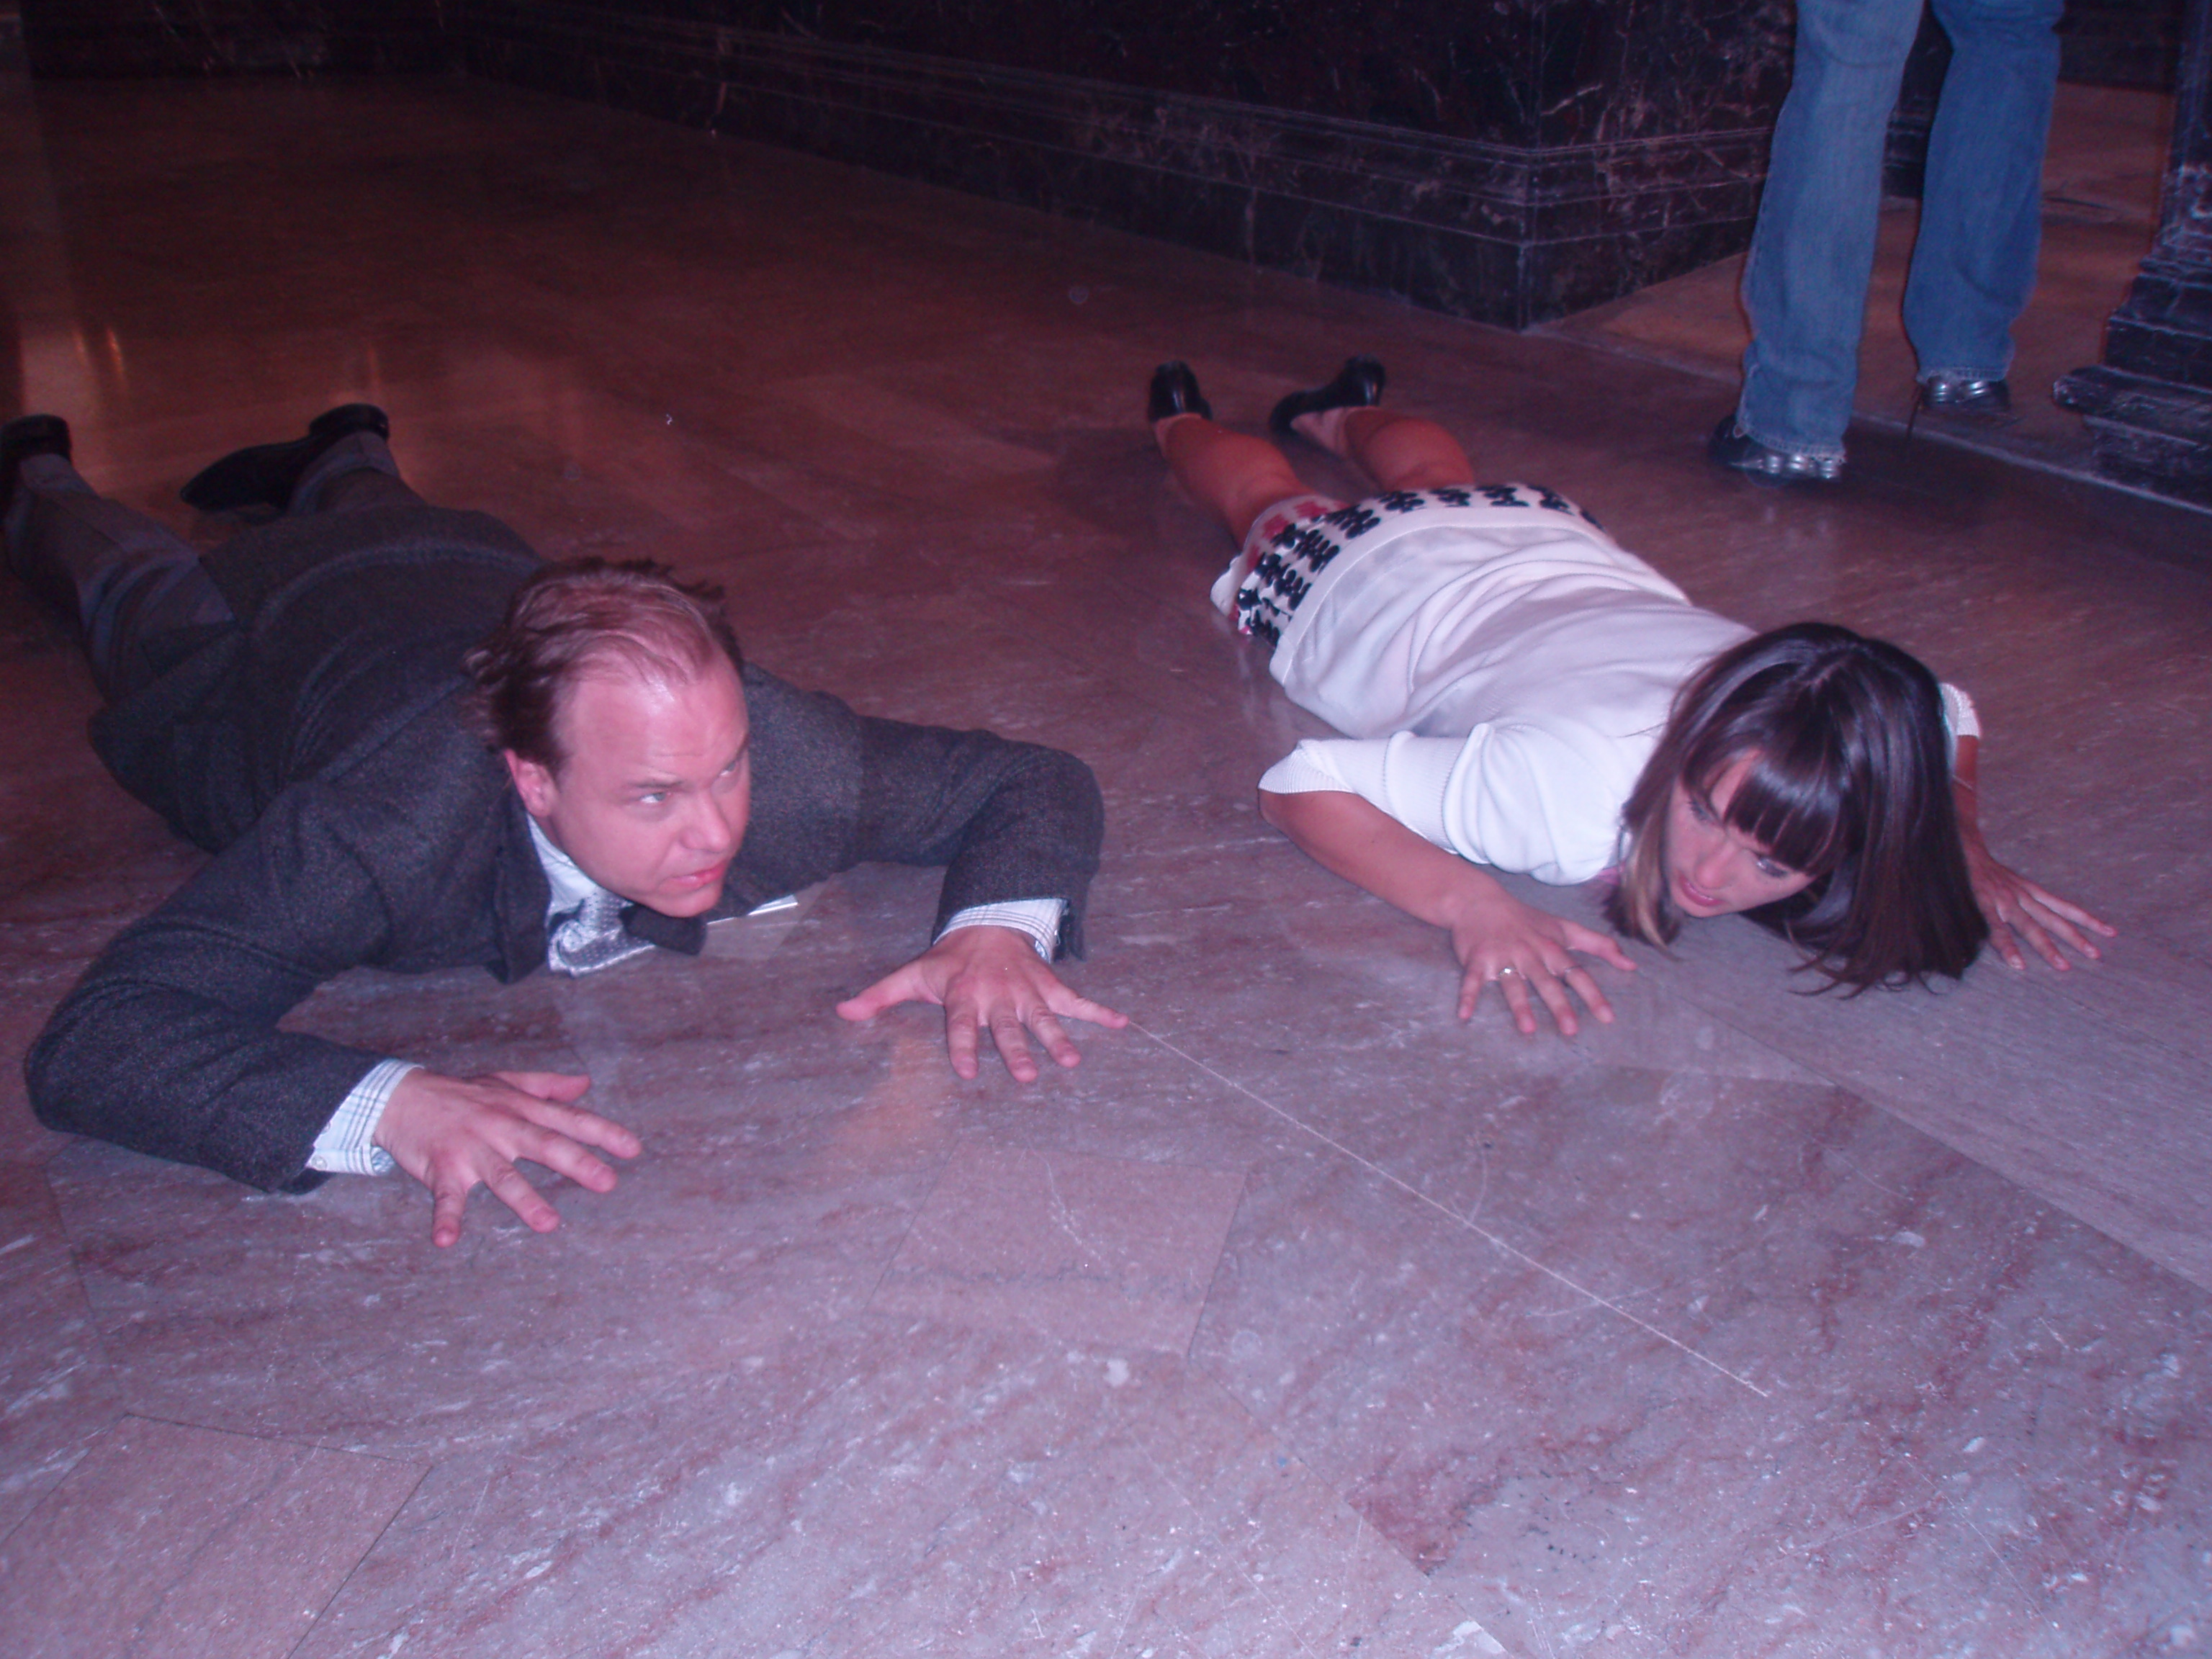 Dennis W. Hall & Sharni Vinson as Hostages in CSI-NY.